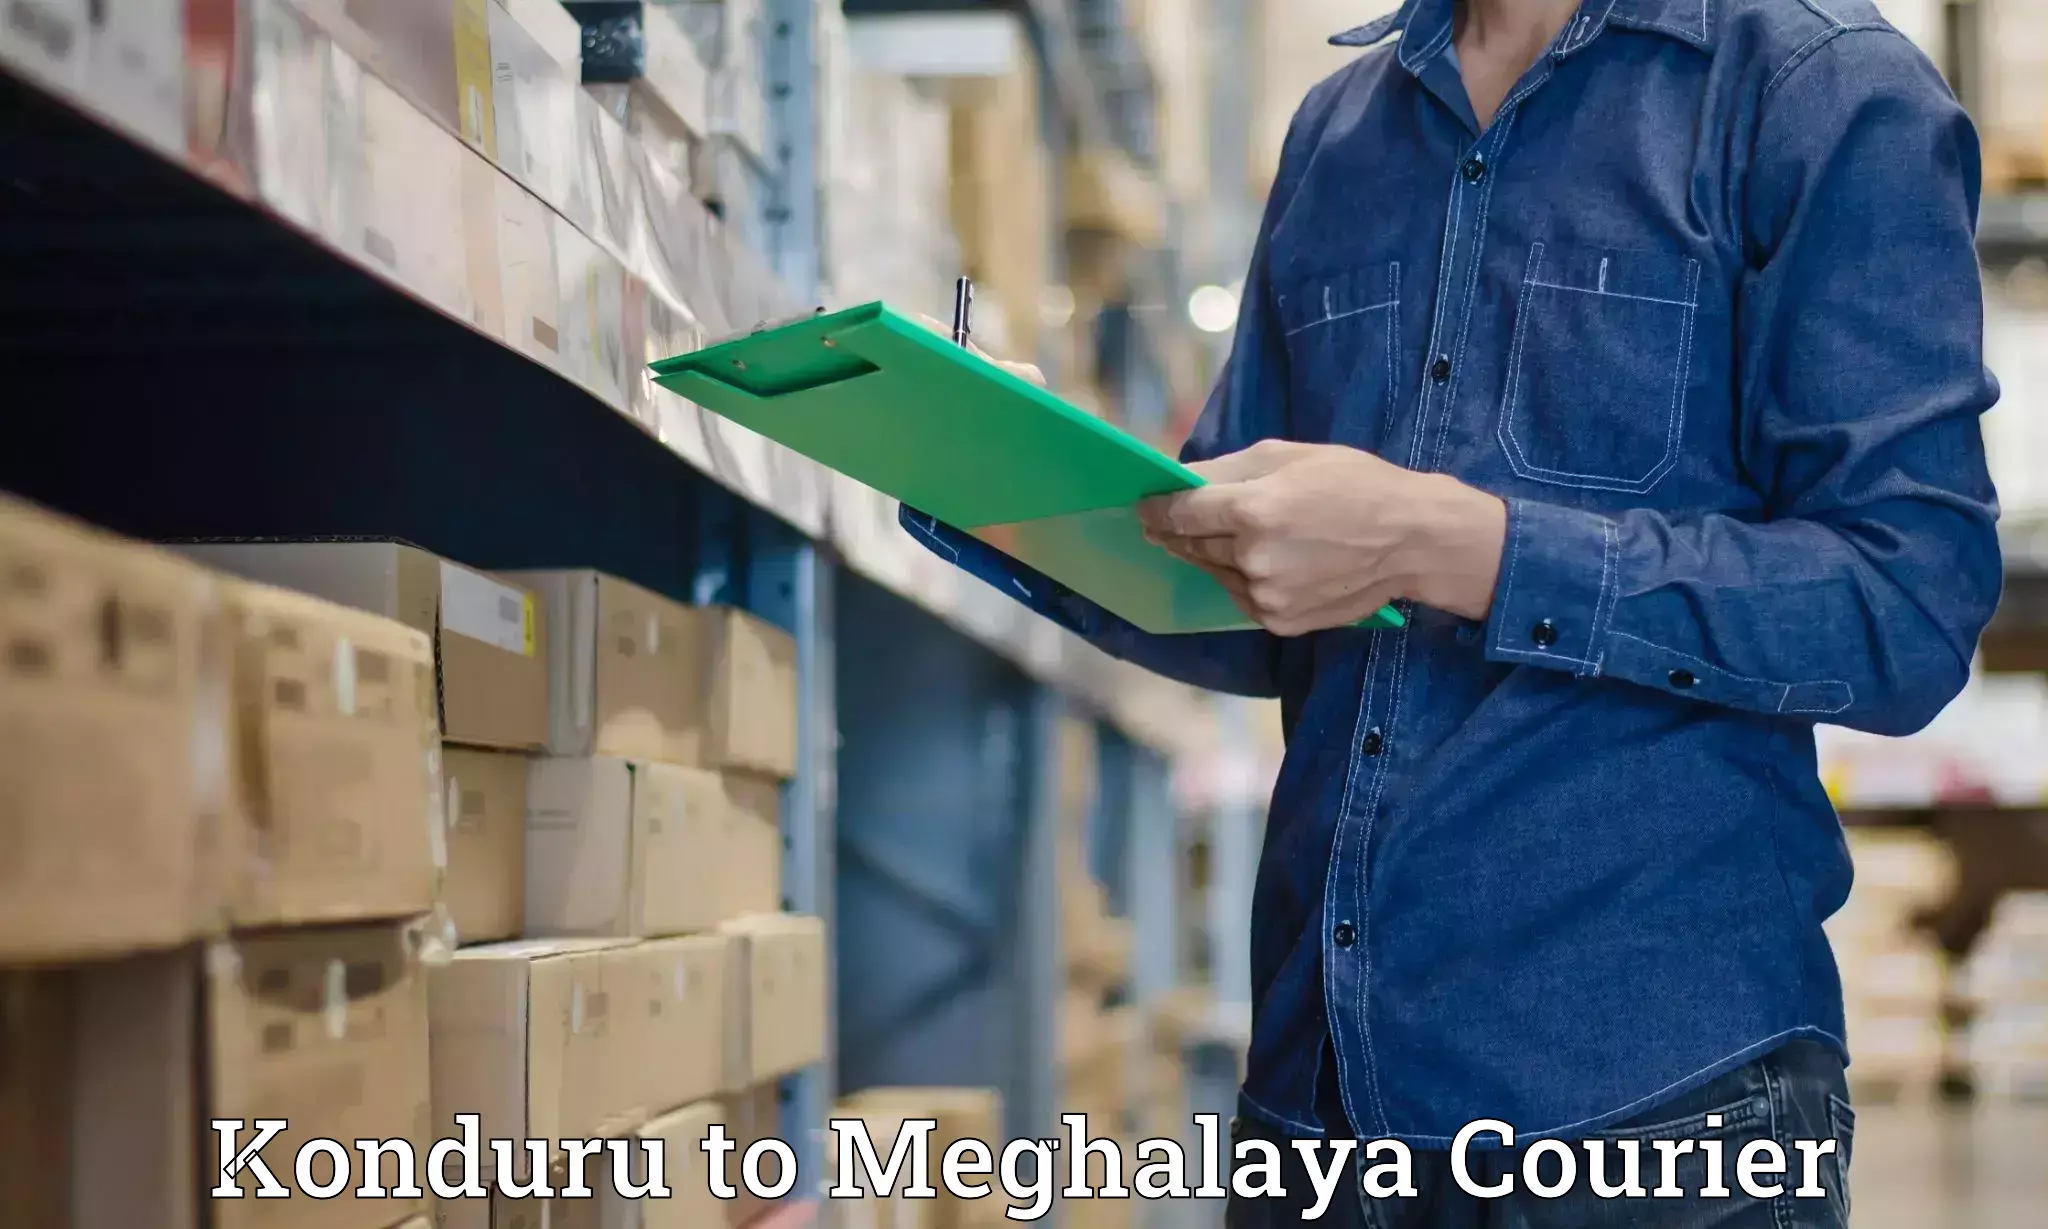 Logistics service provider Konduru to Meghalaya